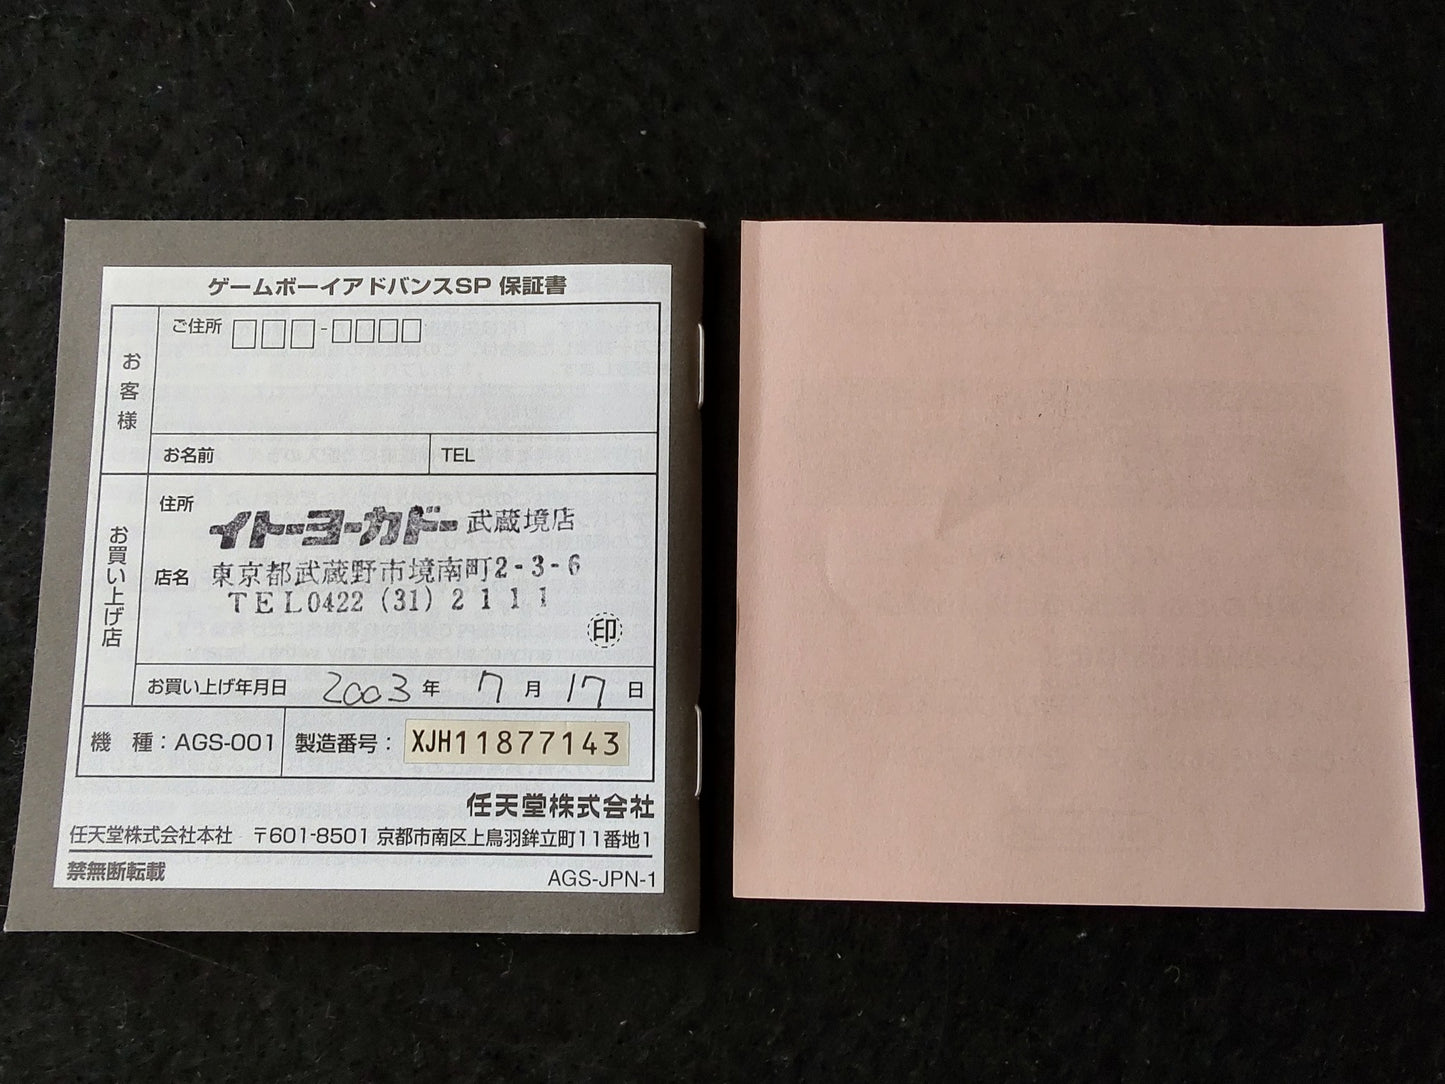 BOKURA NO TAIYO boktai LIMITED EDITION GAMEBOY ADVANCE SP GBA boxed set-d0422-